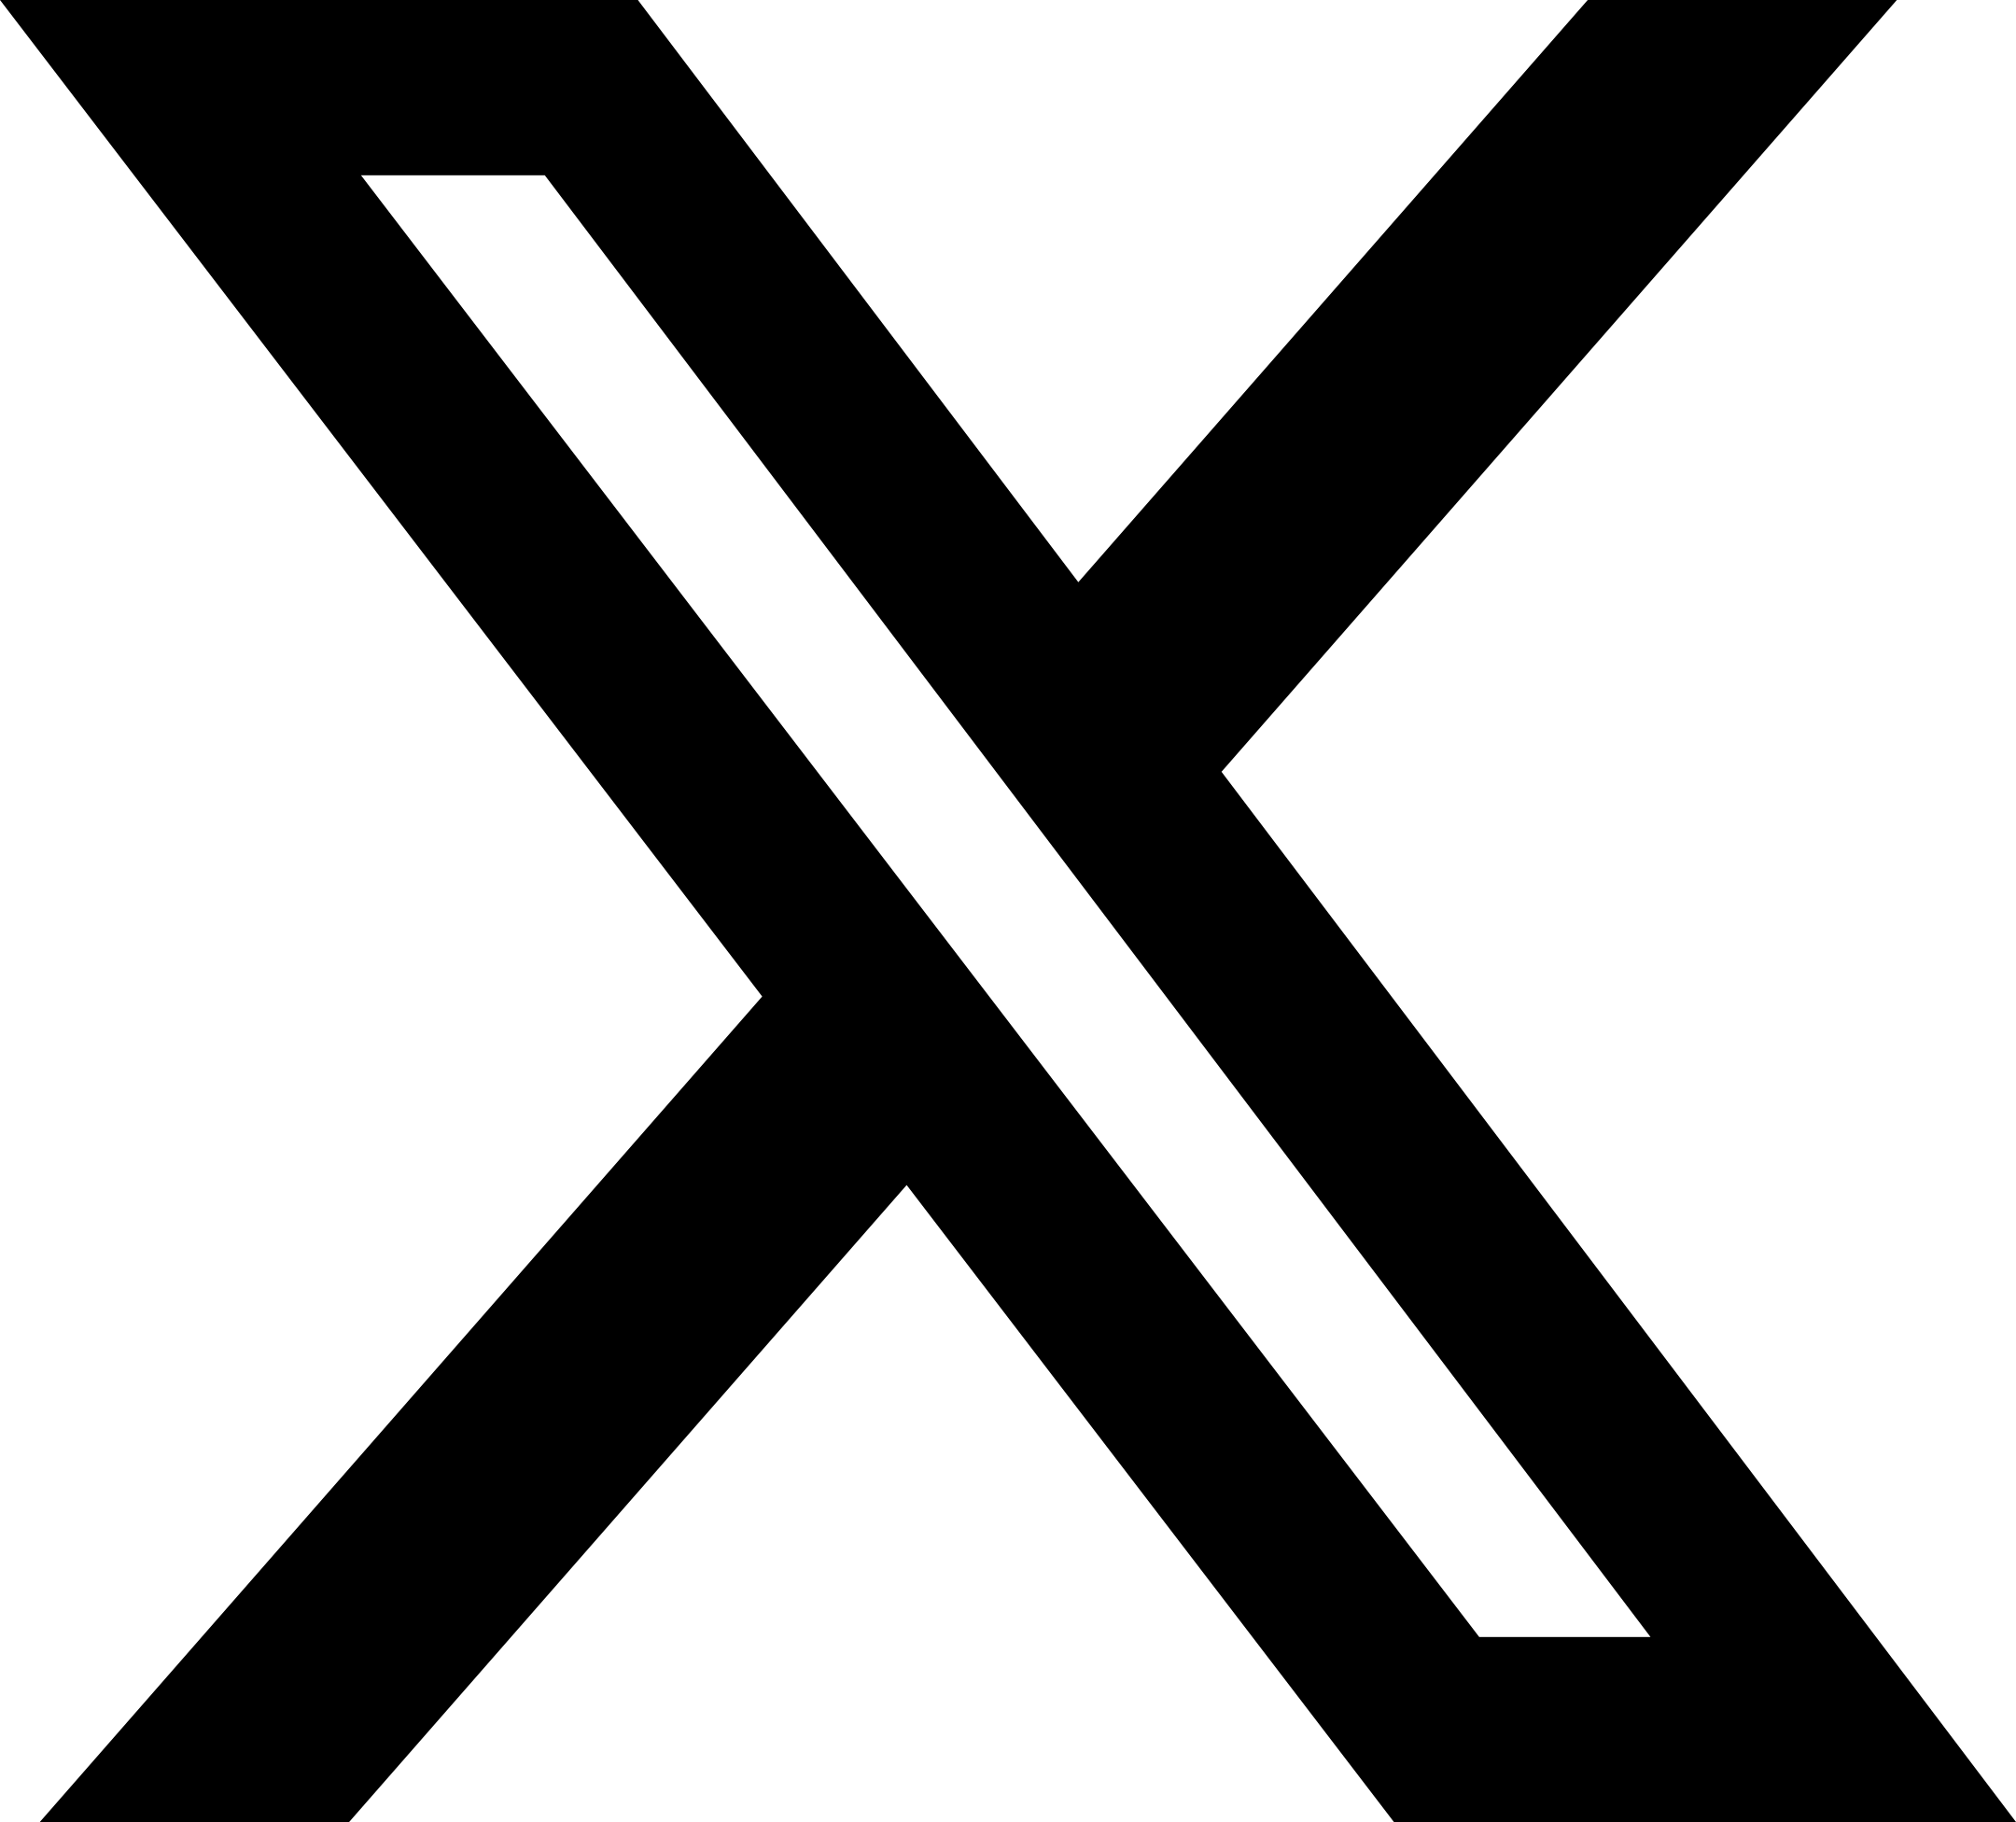 x corp logo 1 - X Corp Logo